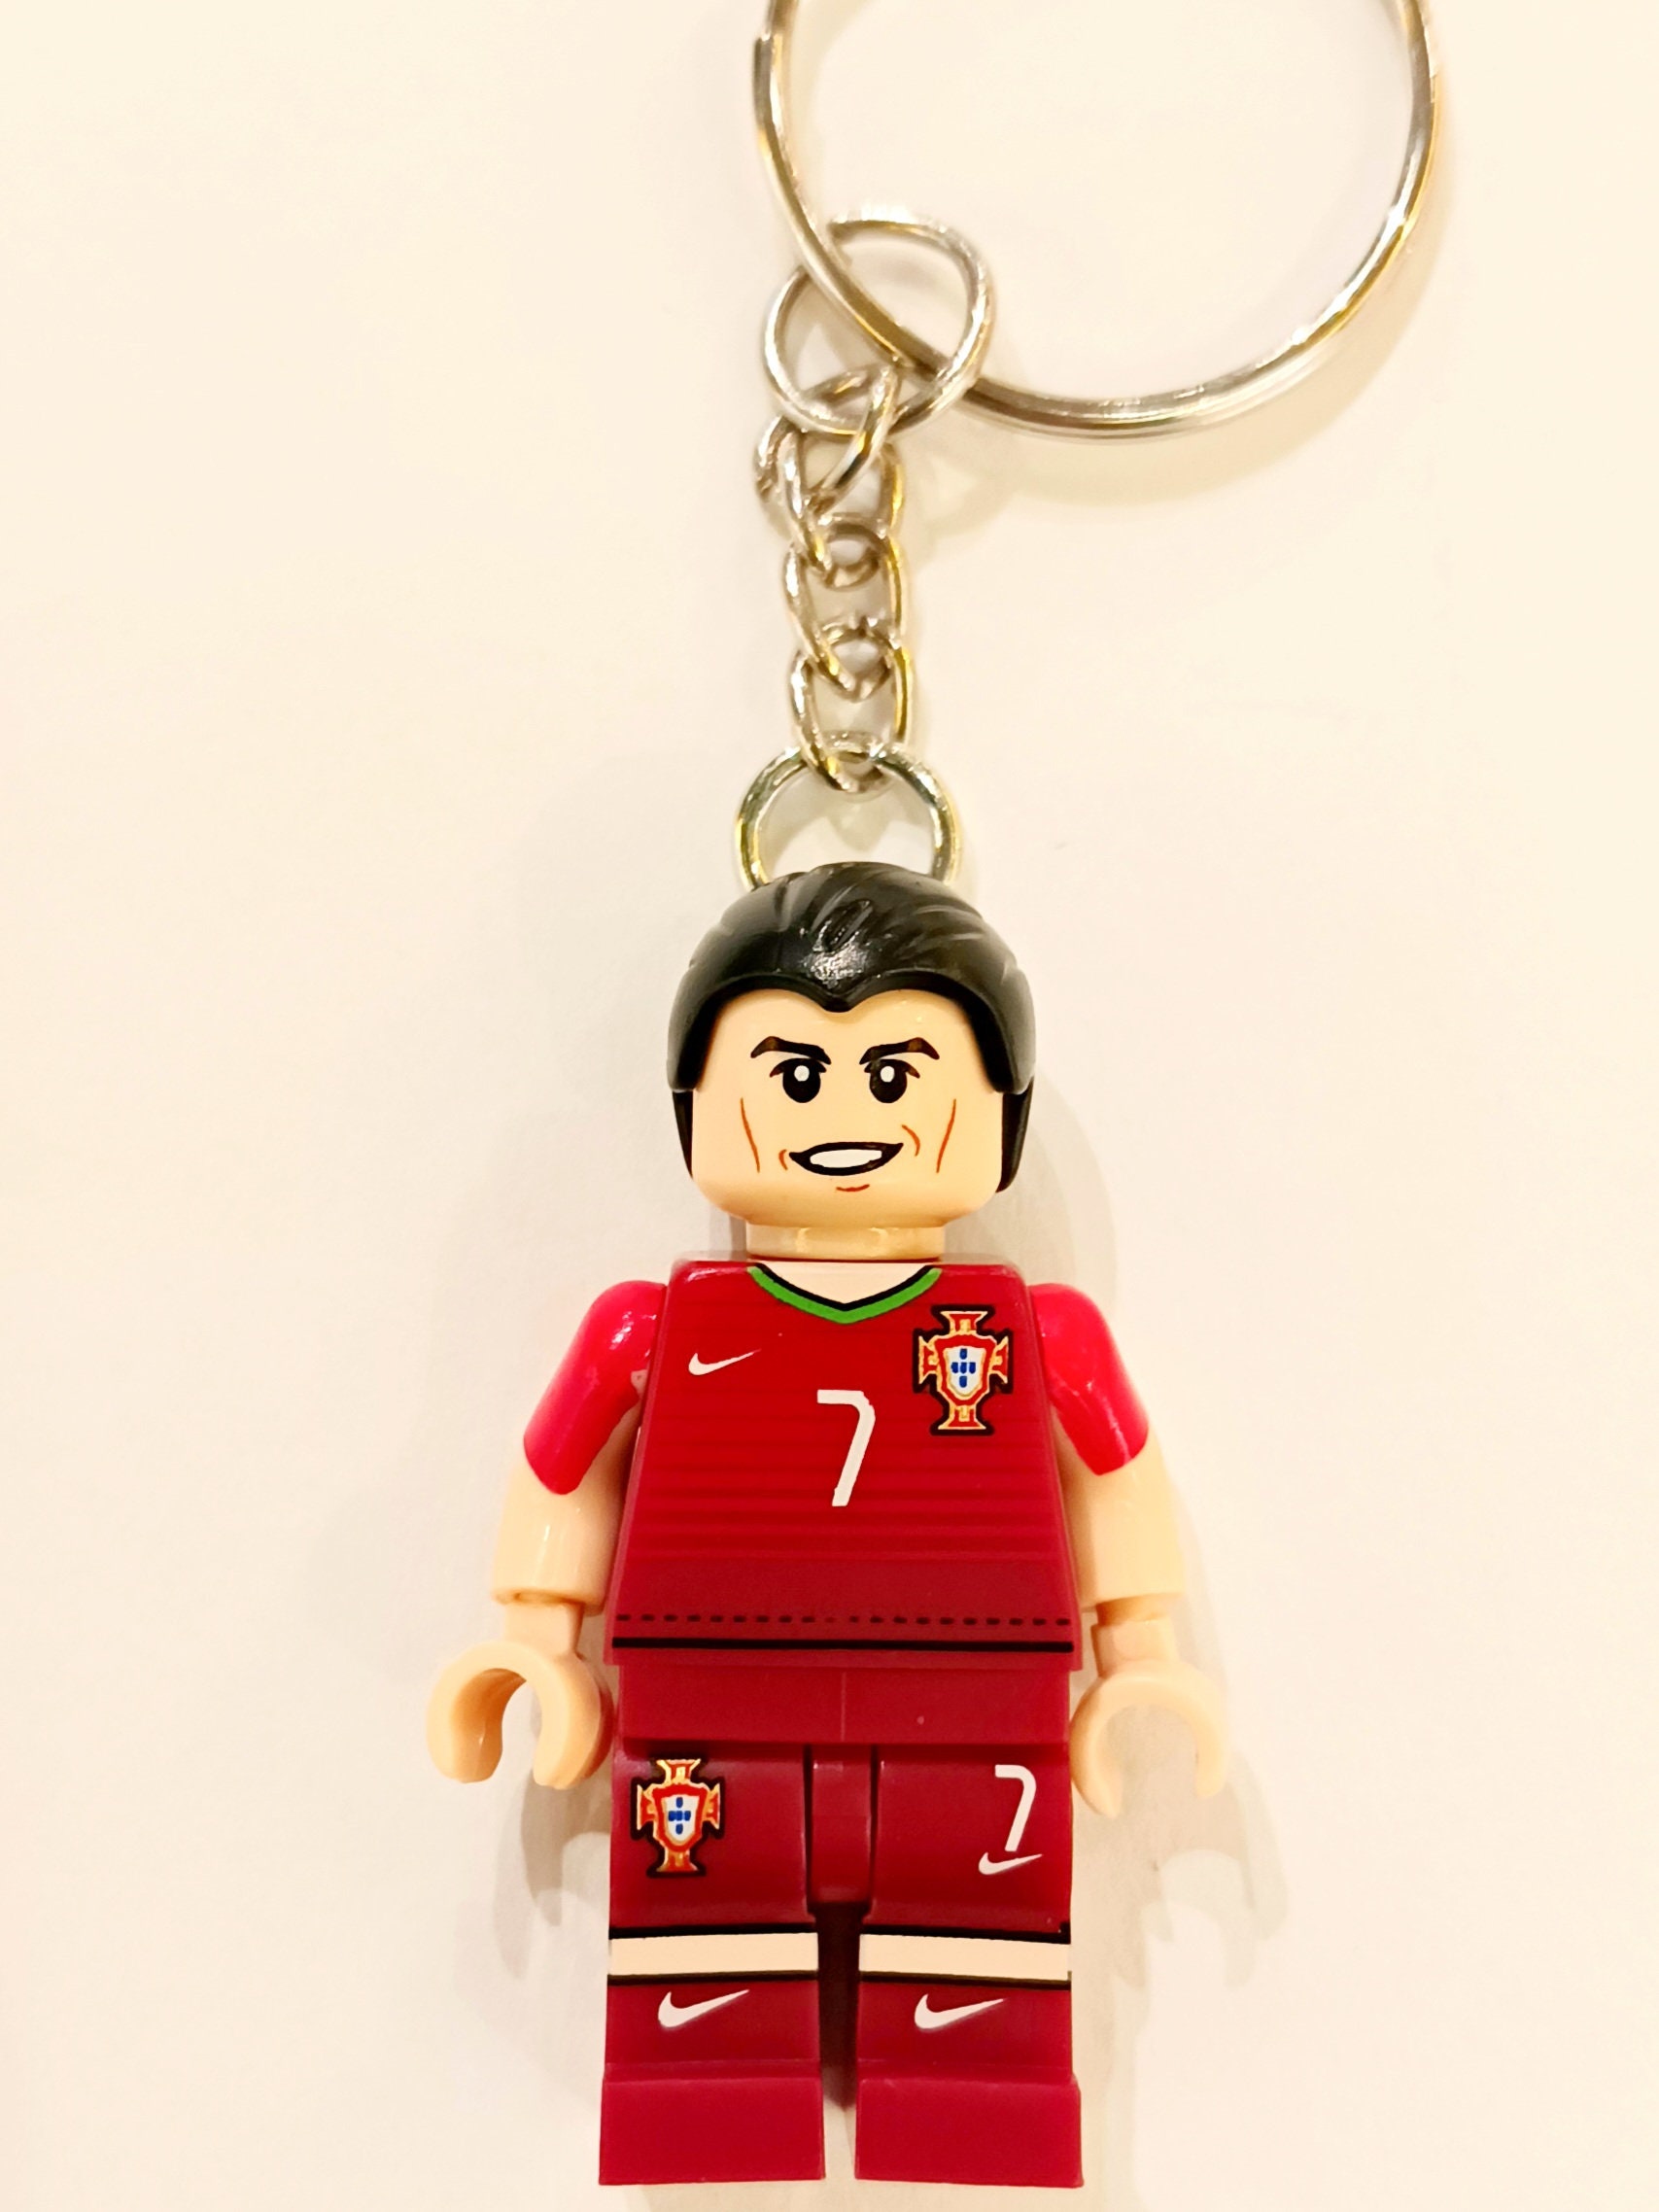 New 2017 Real Madrid Lego Figure Set Cristiano Ronaldo Milano Legos jersey